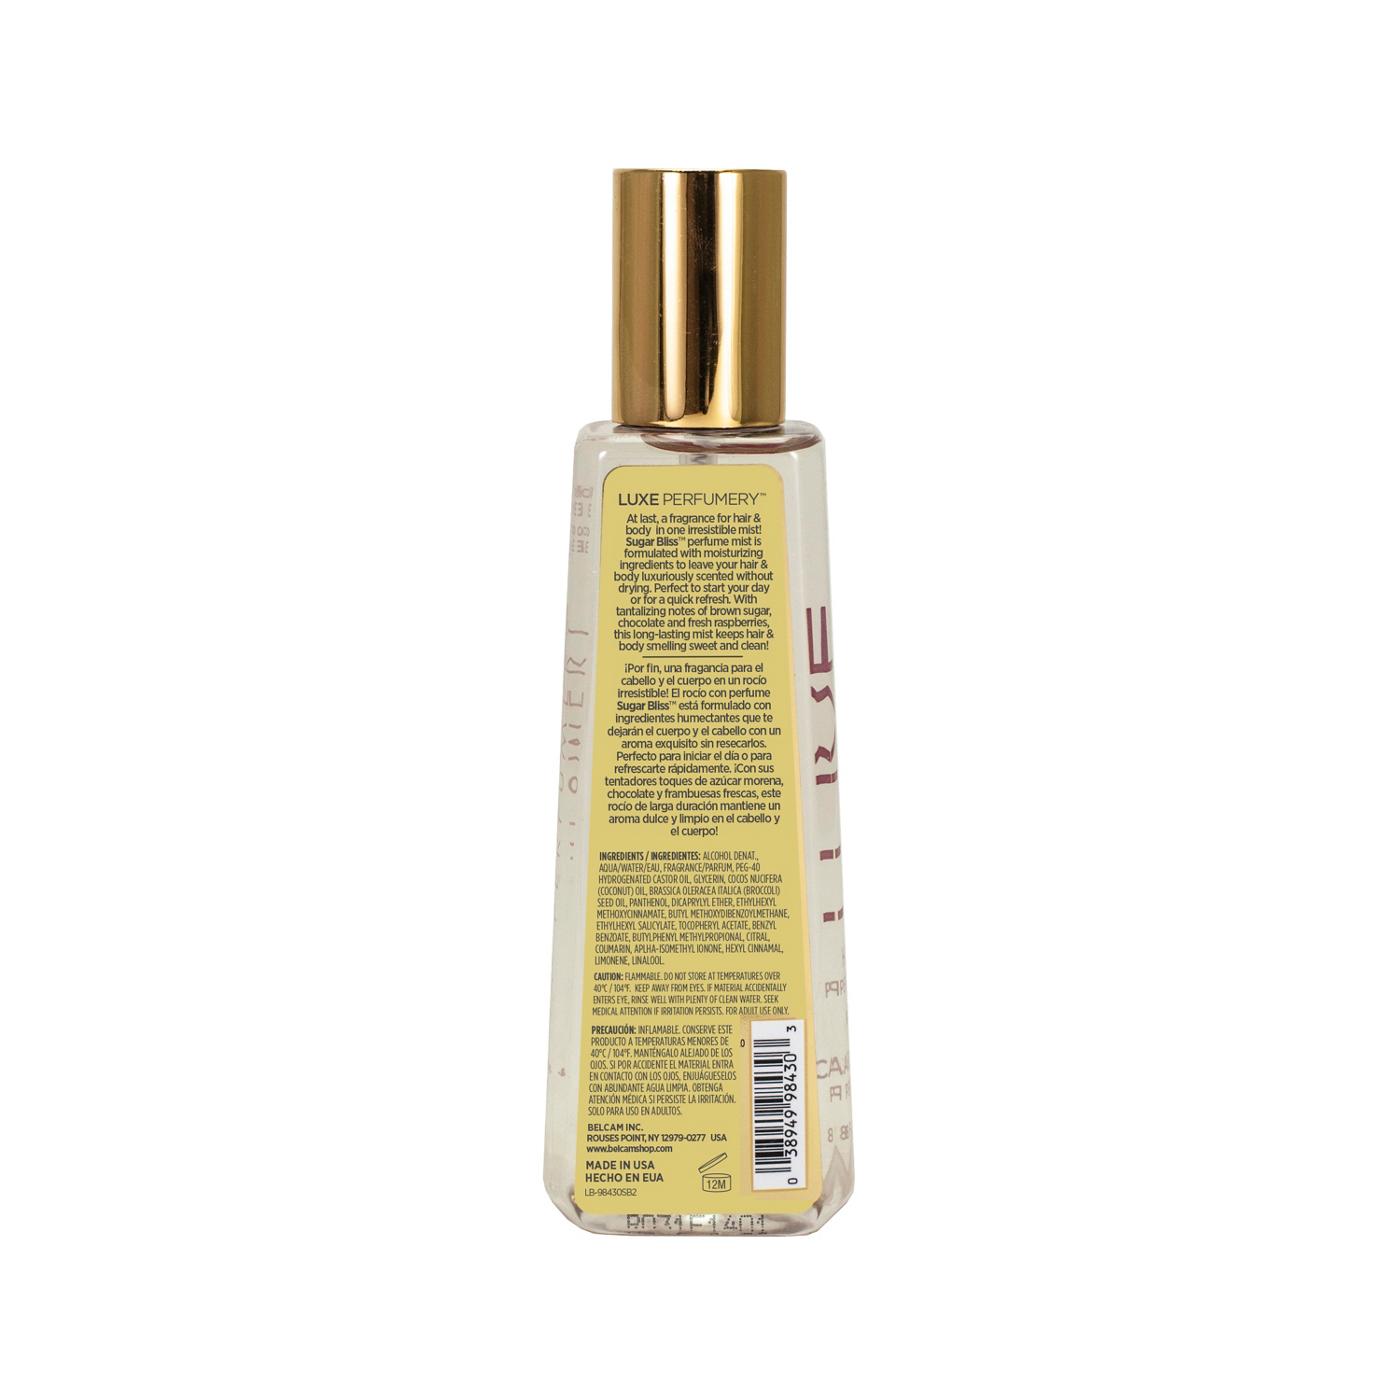 Luxe Perfume Hair & Body Perfume Mist - Sugar Bliss; image 2 of 3